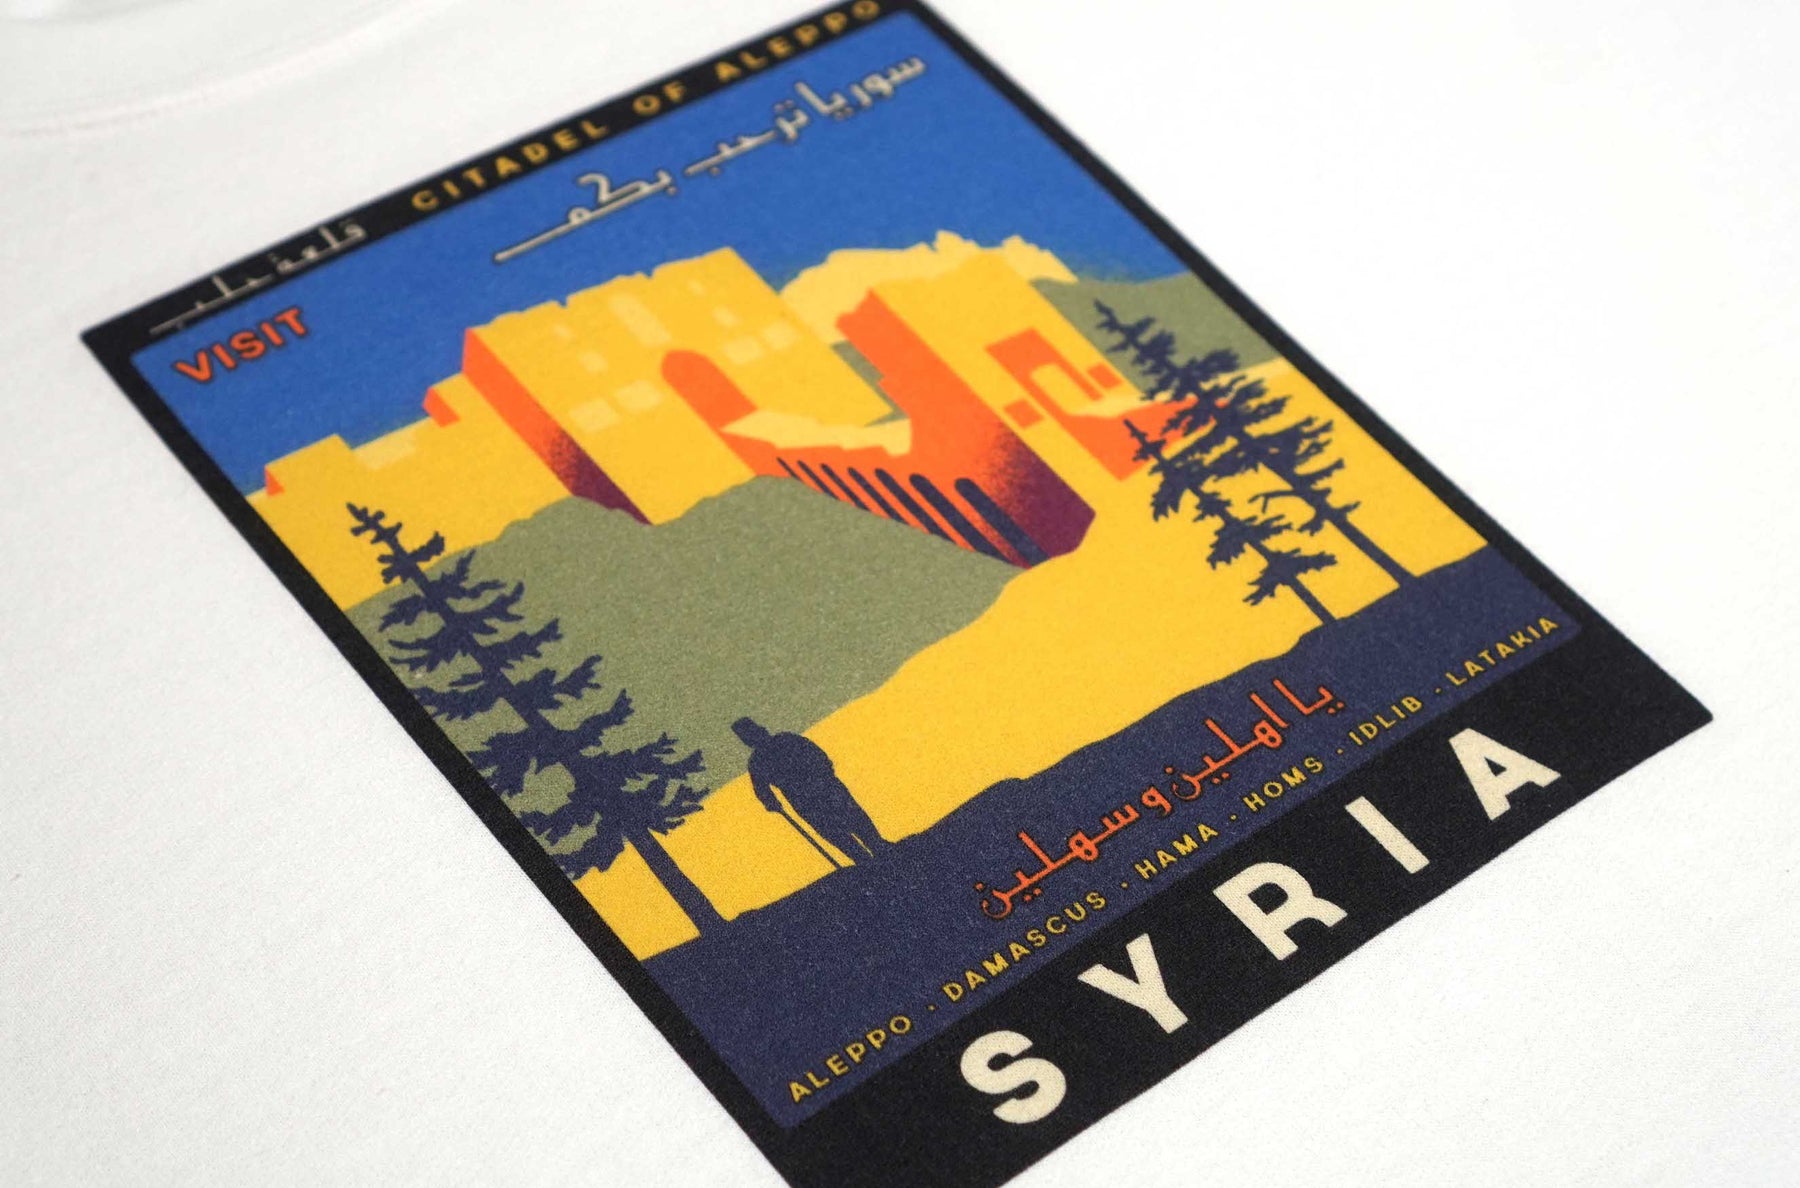 Travel Syria - T Shirt